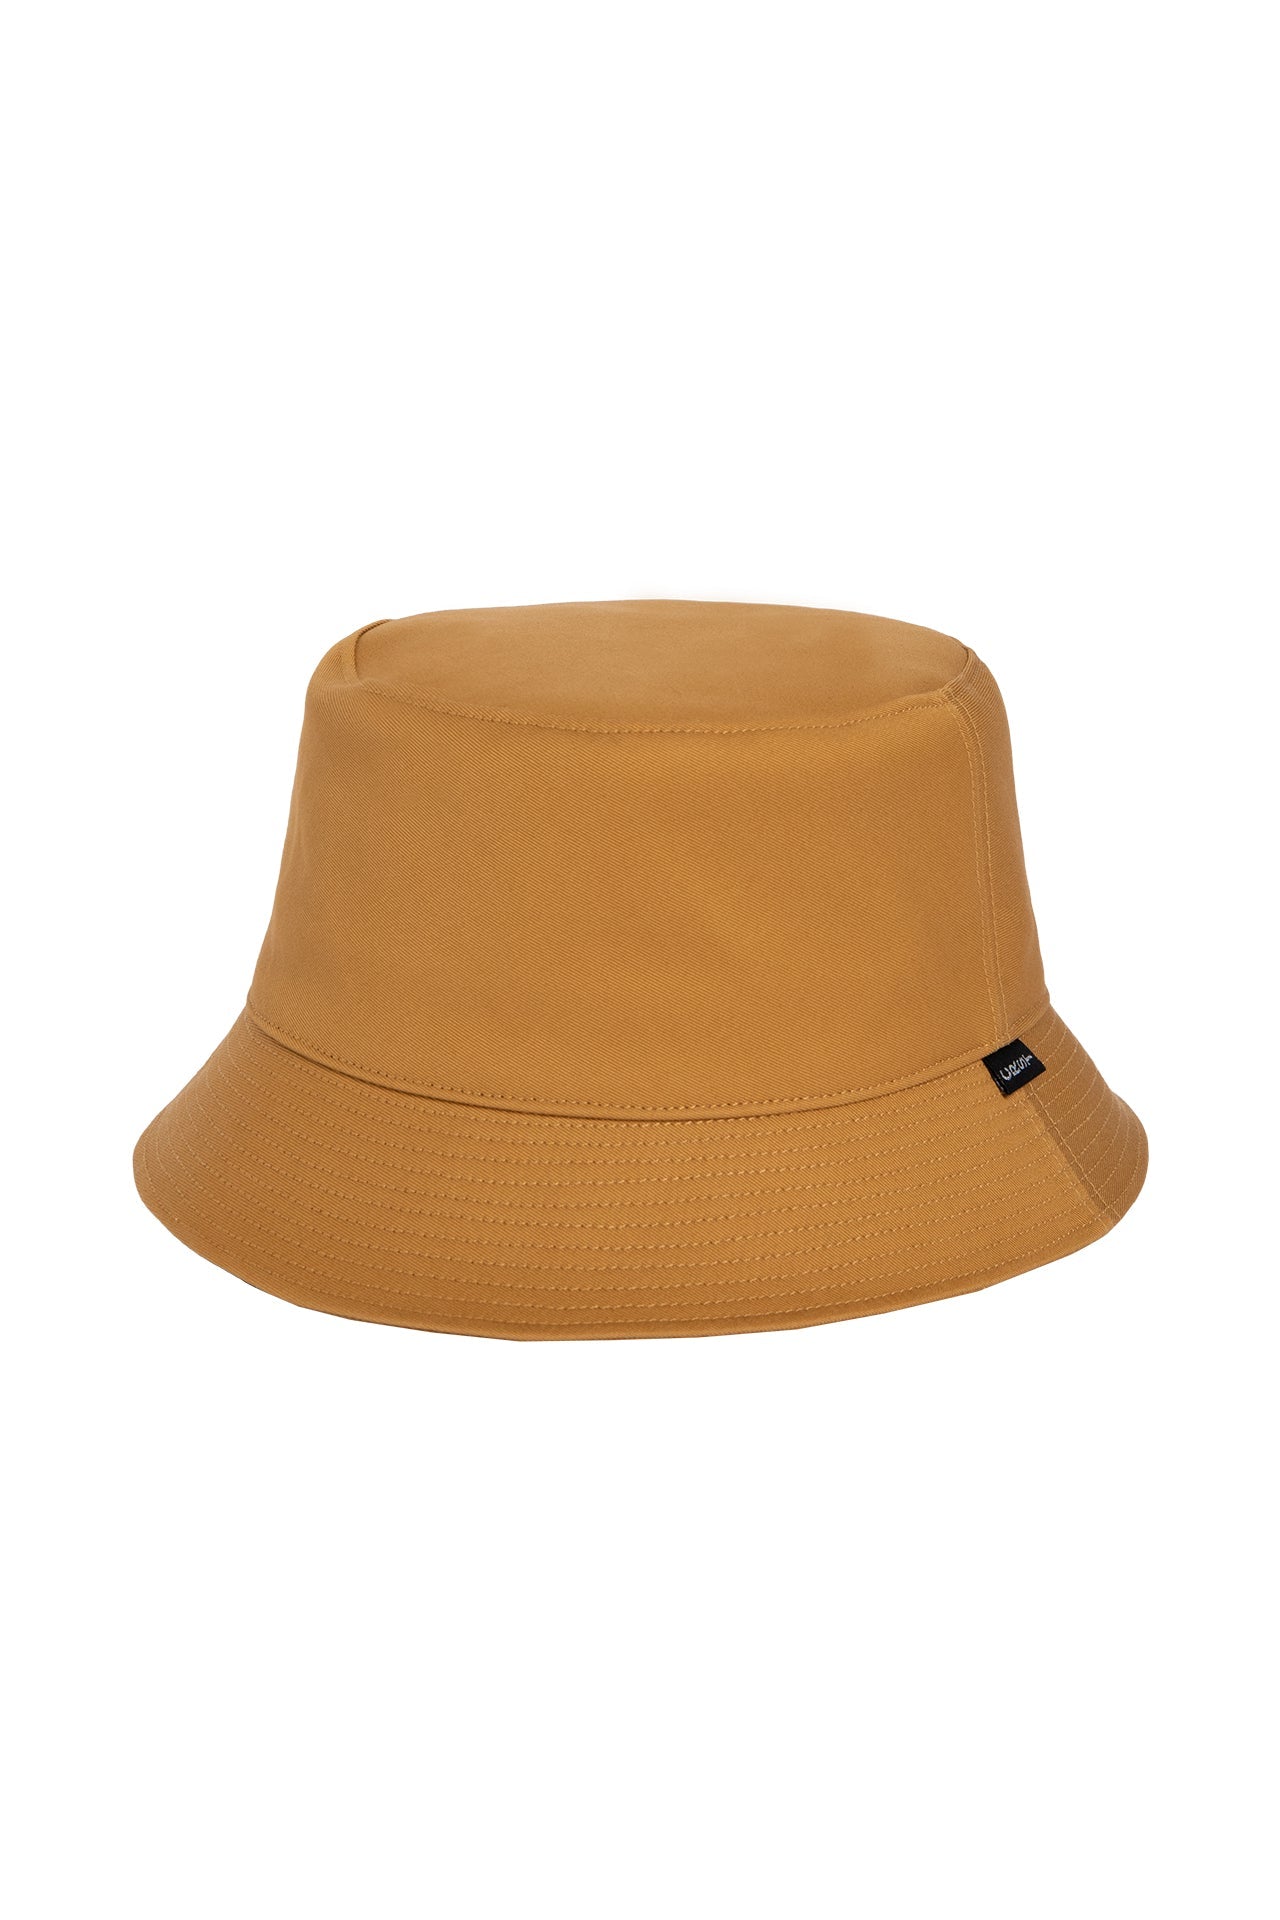 CREST - Resident Bucket Hat - Mustard Yellow